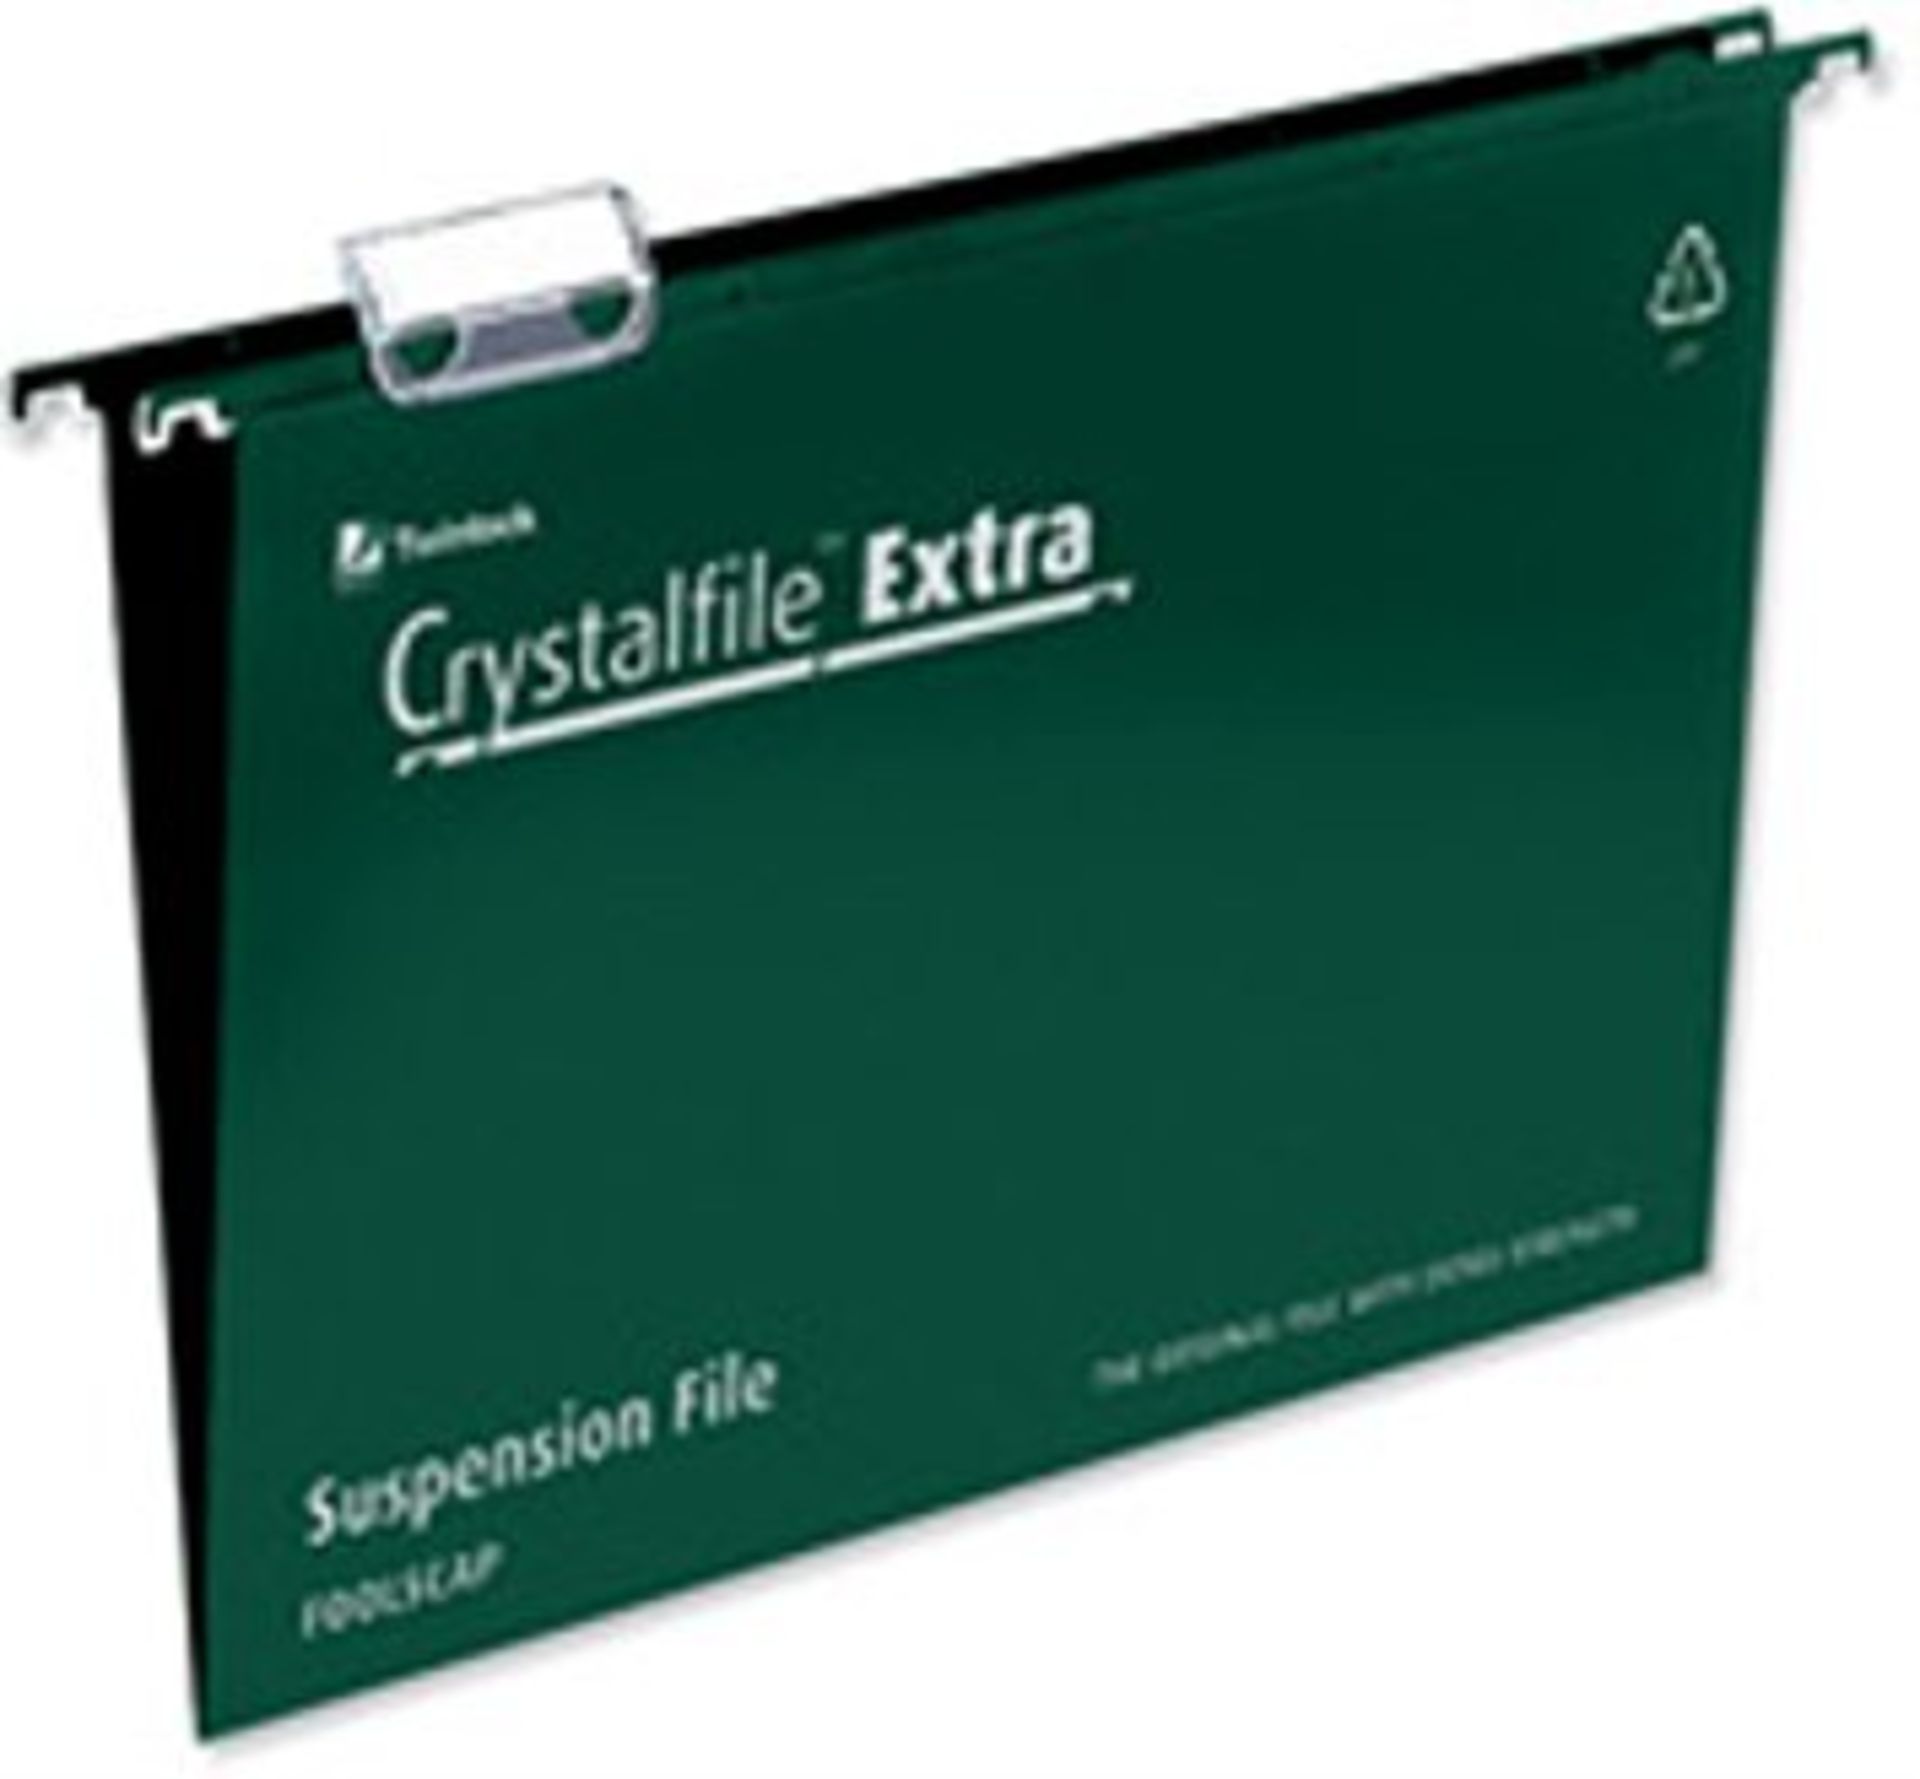 25 x Acco Twinlock Crystalfile Extra Foolscap Suspension Files - Green With 150 Sheet Capacity -